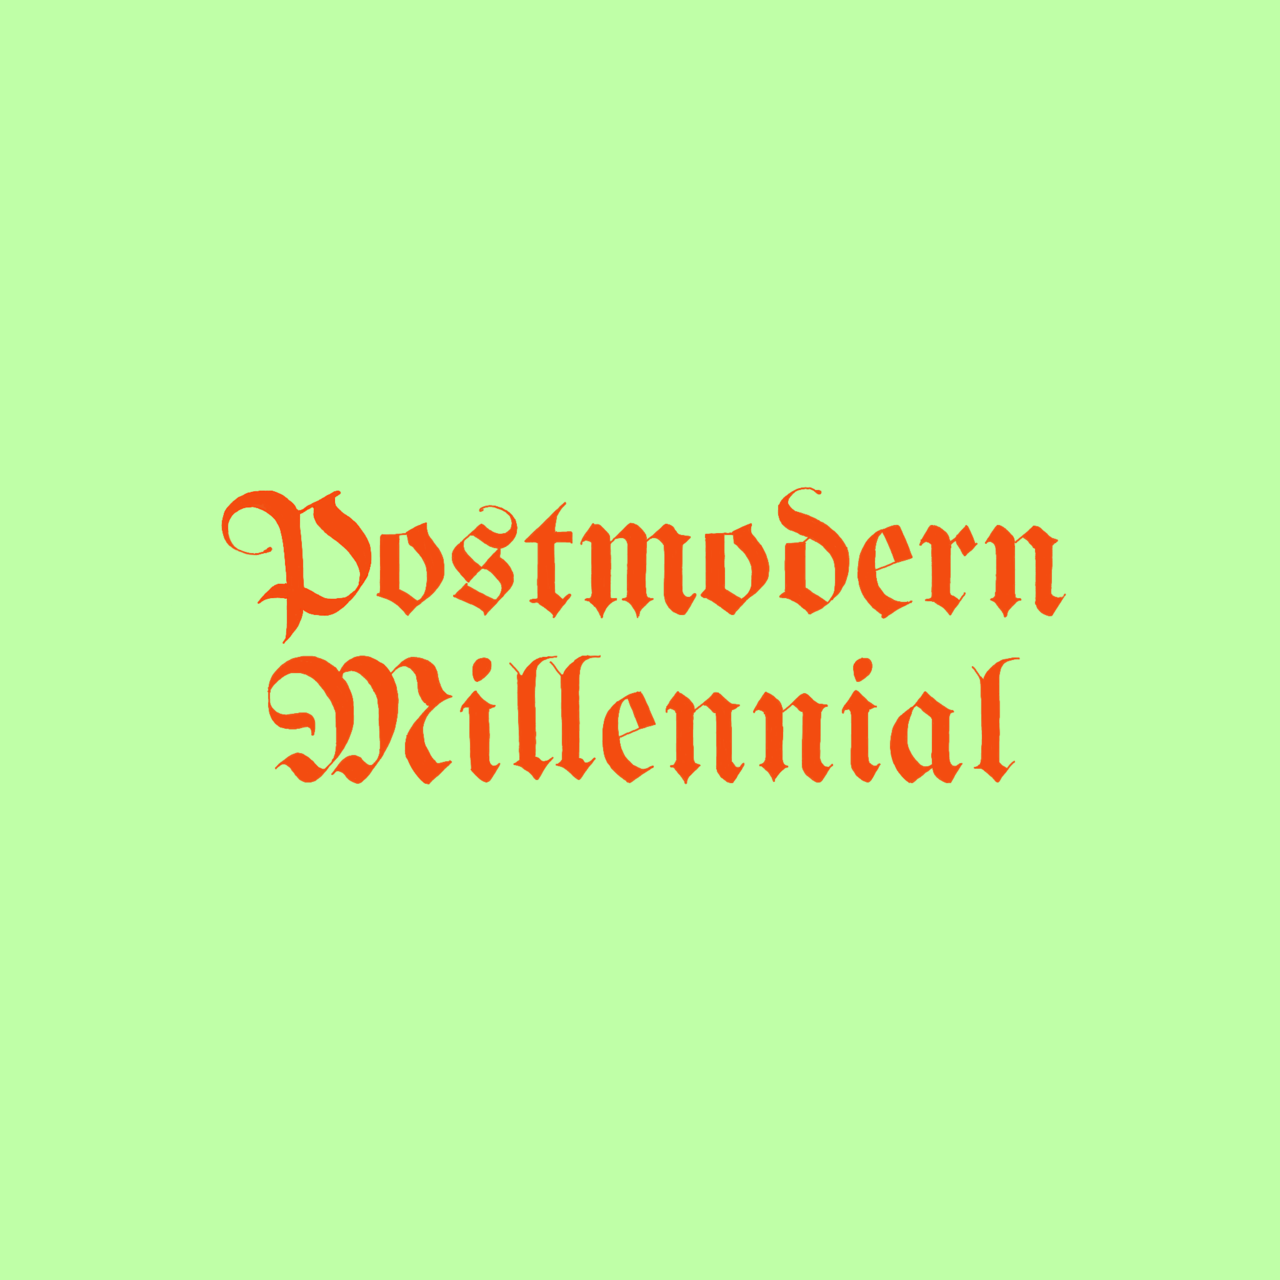 postmodern millennial